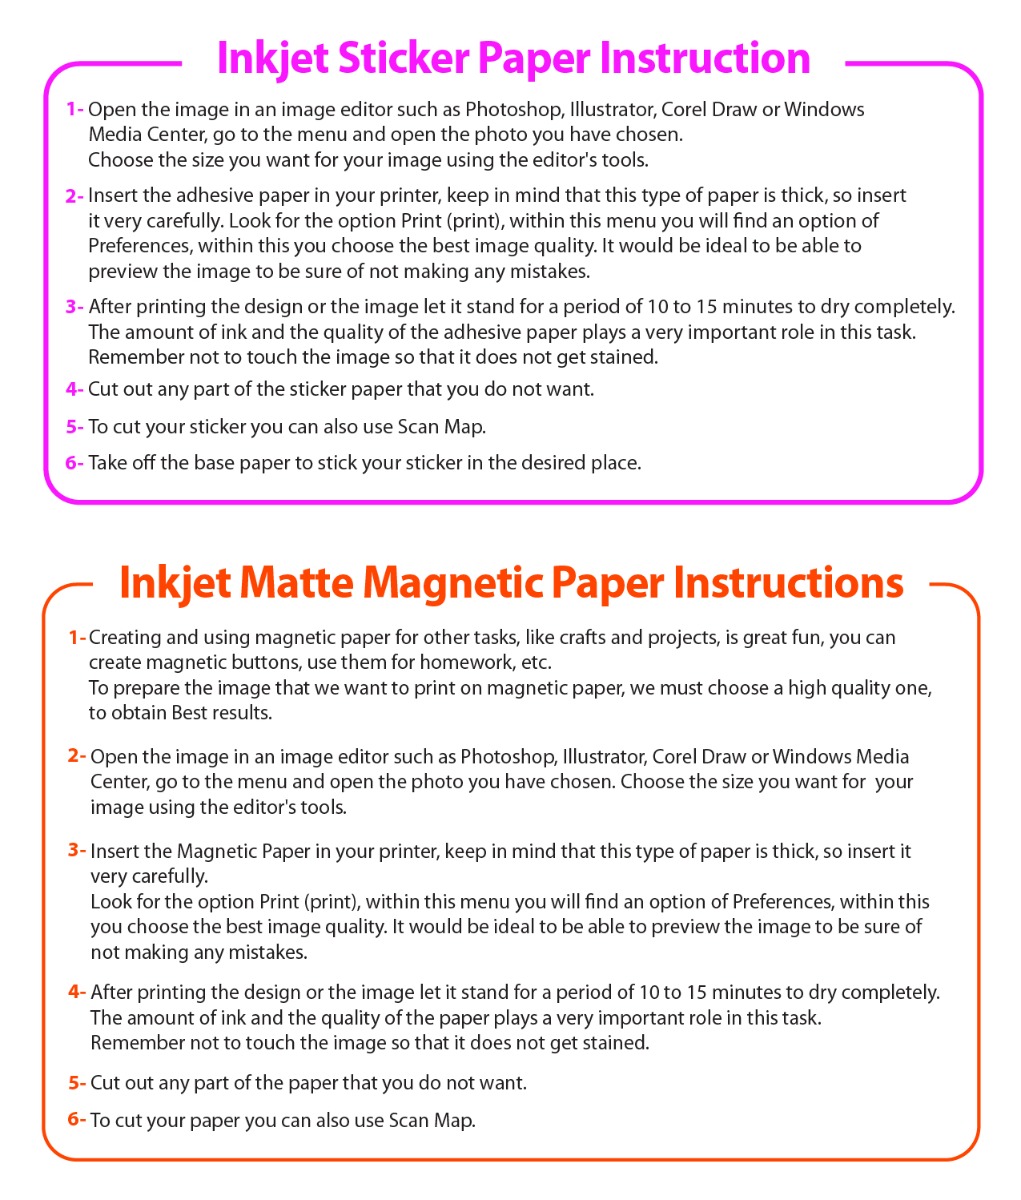 Inkjet Sticker Paper and Inkjet Matte Magnetic Paper